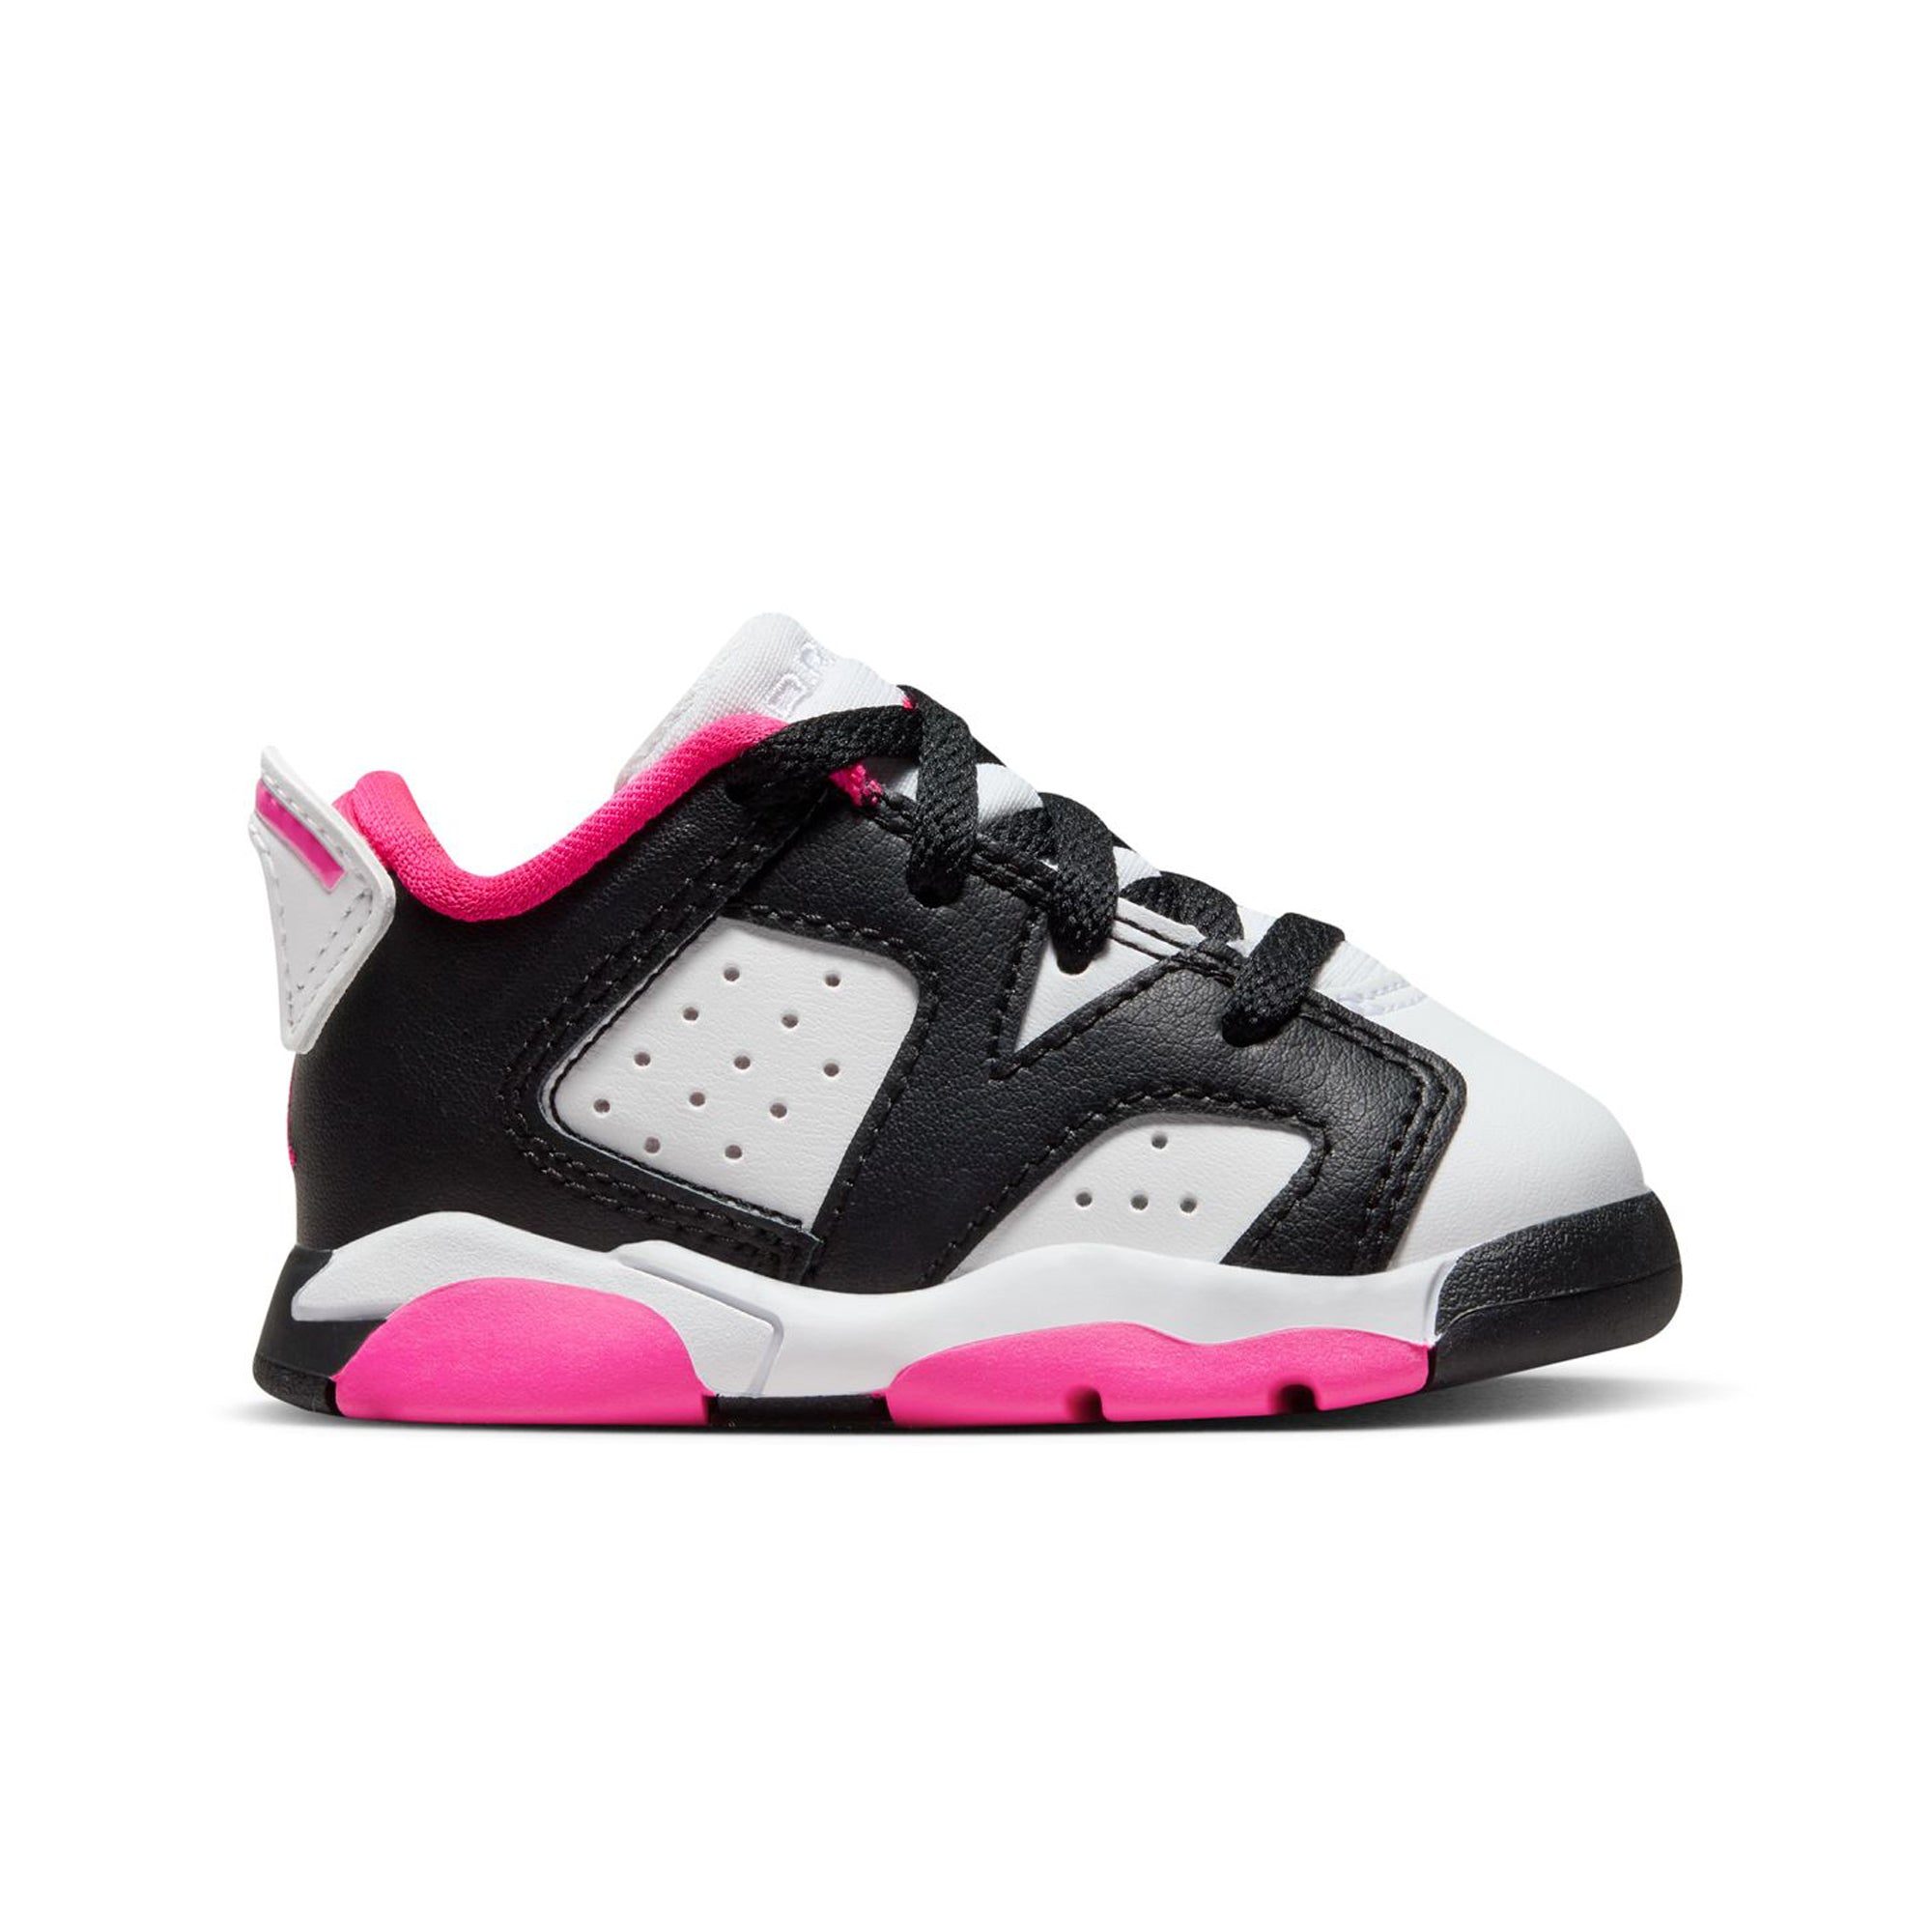 Air Jordan 6 Retro Low "Fierce Pink" Toddler DV3529-061